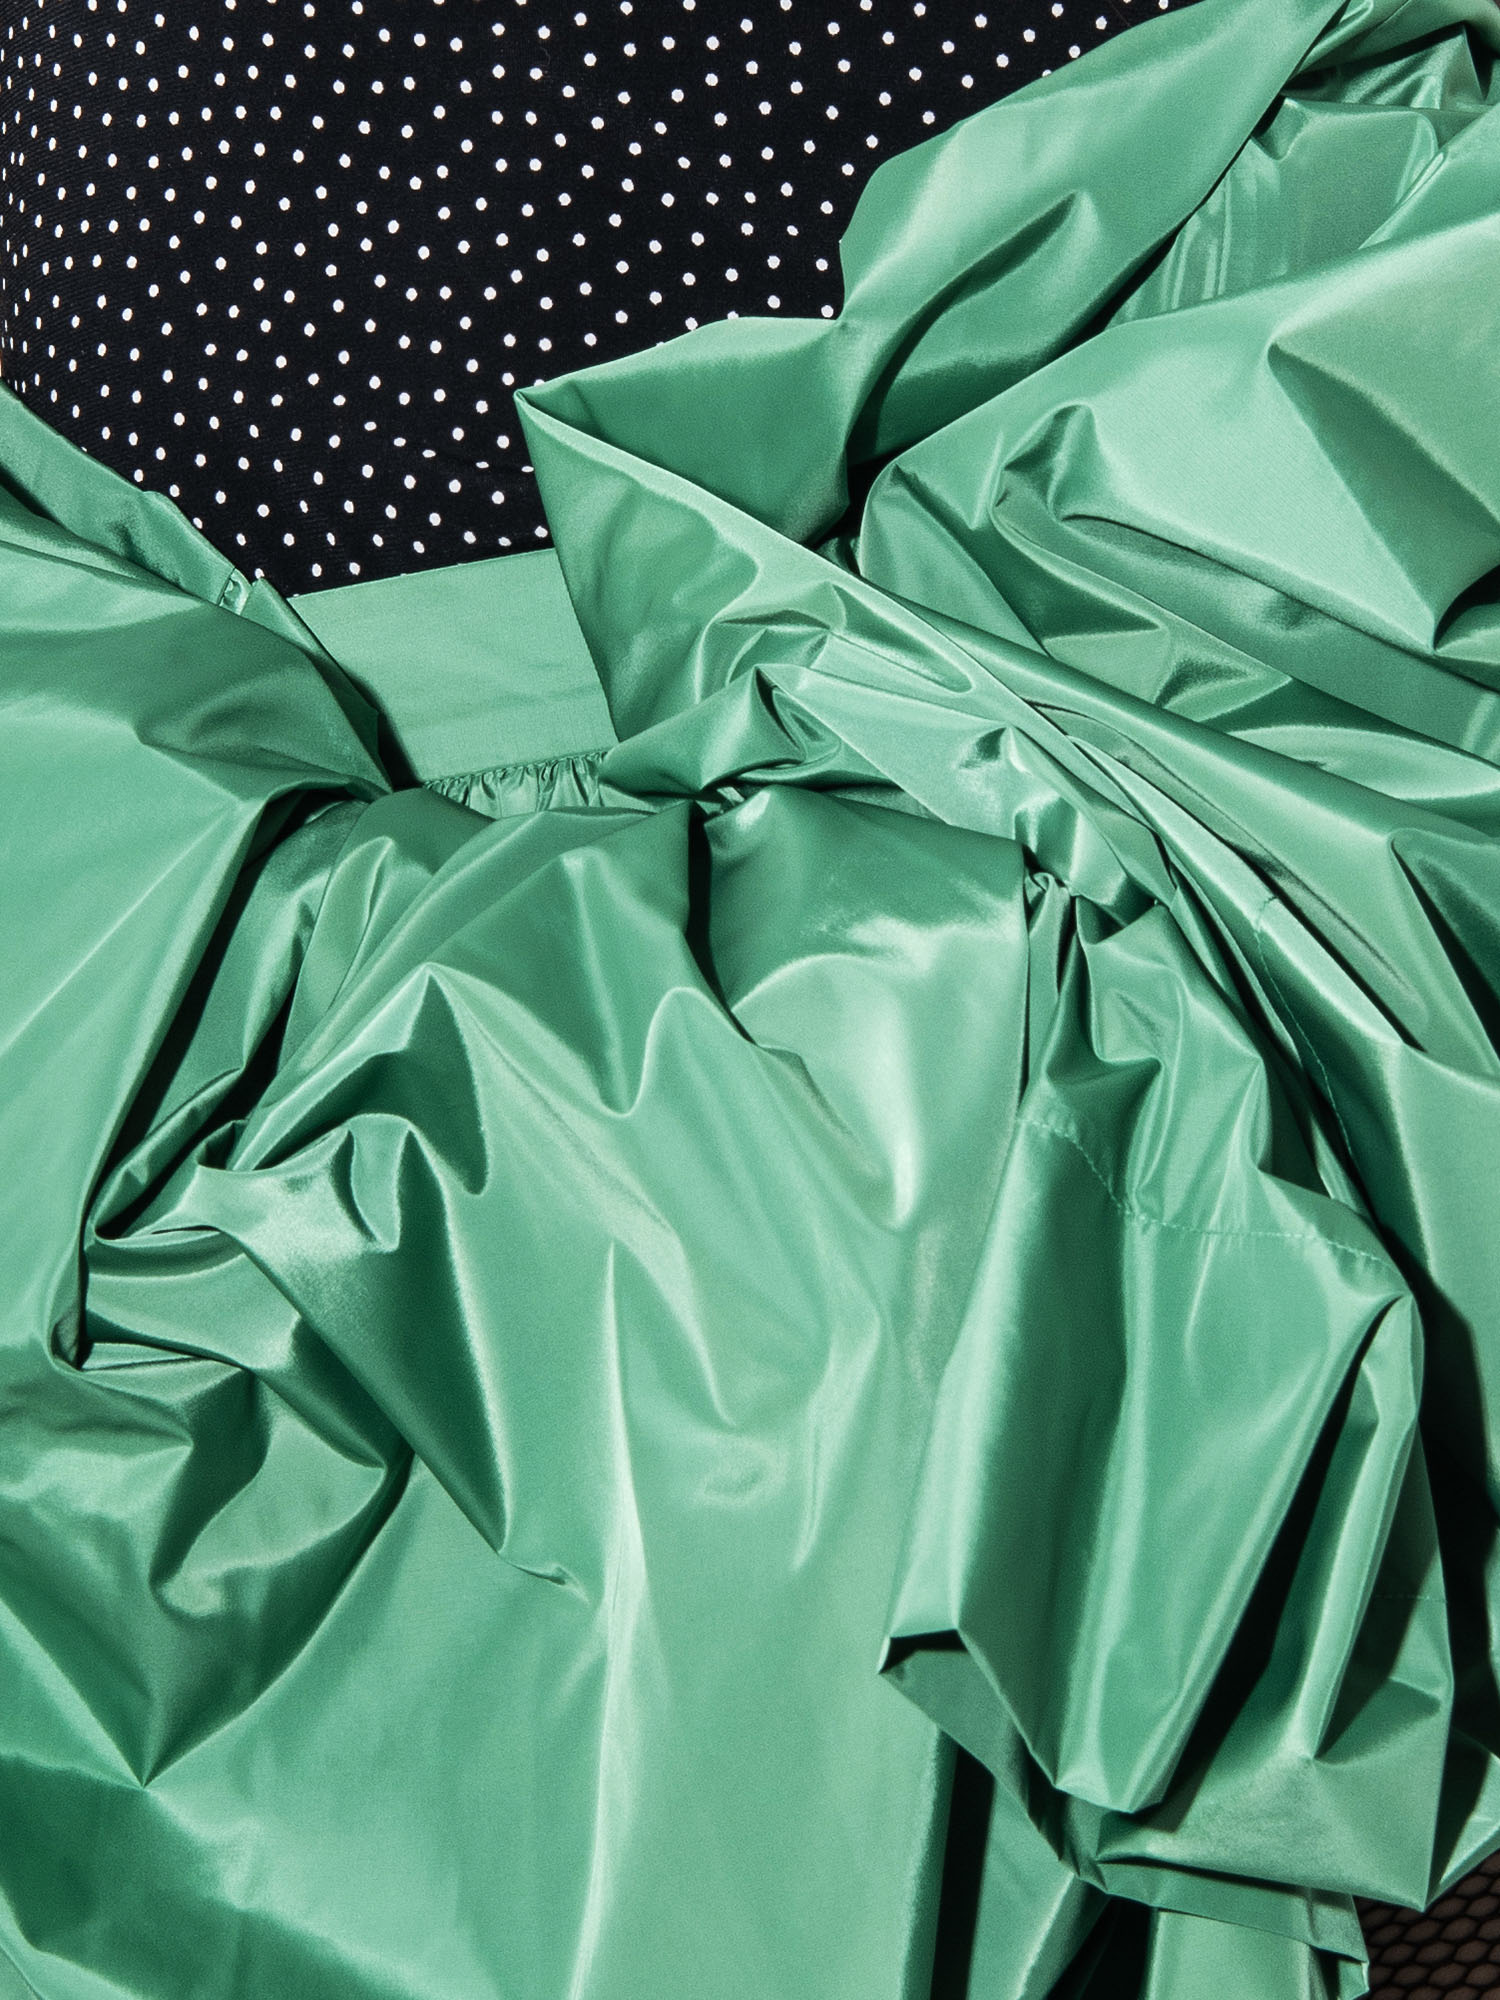 Green Taffeta skirt detail • Sassa Björg